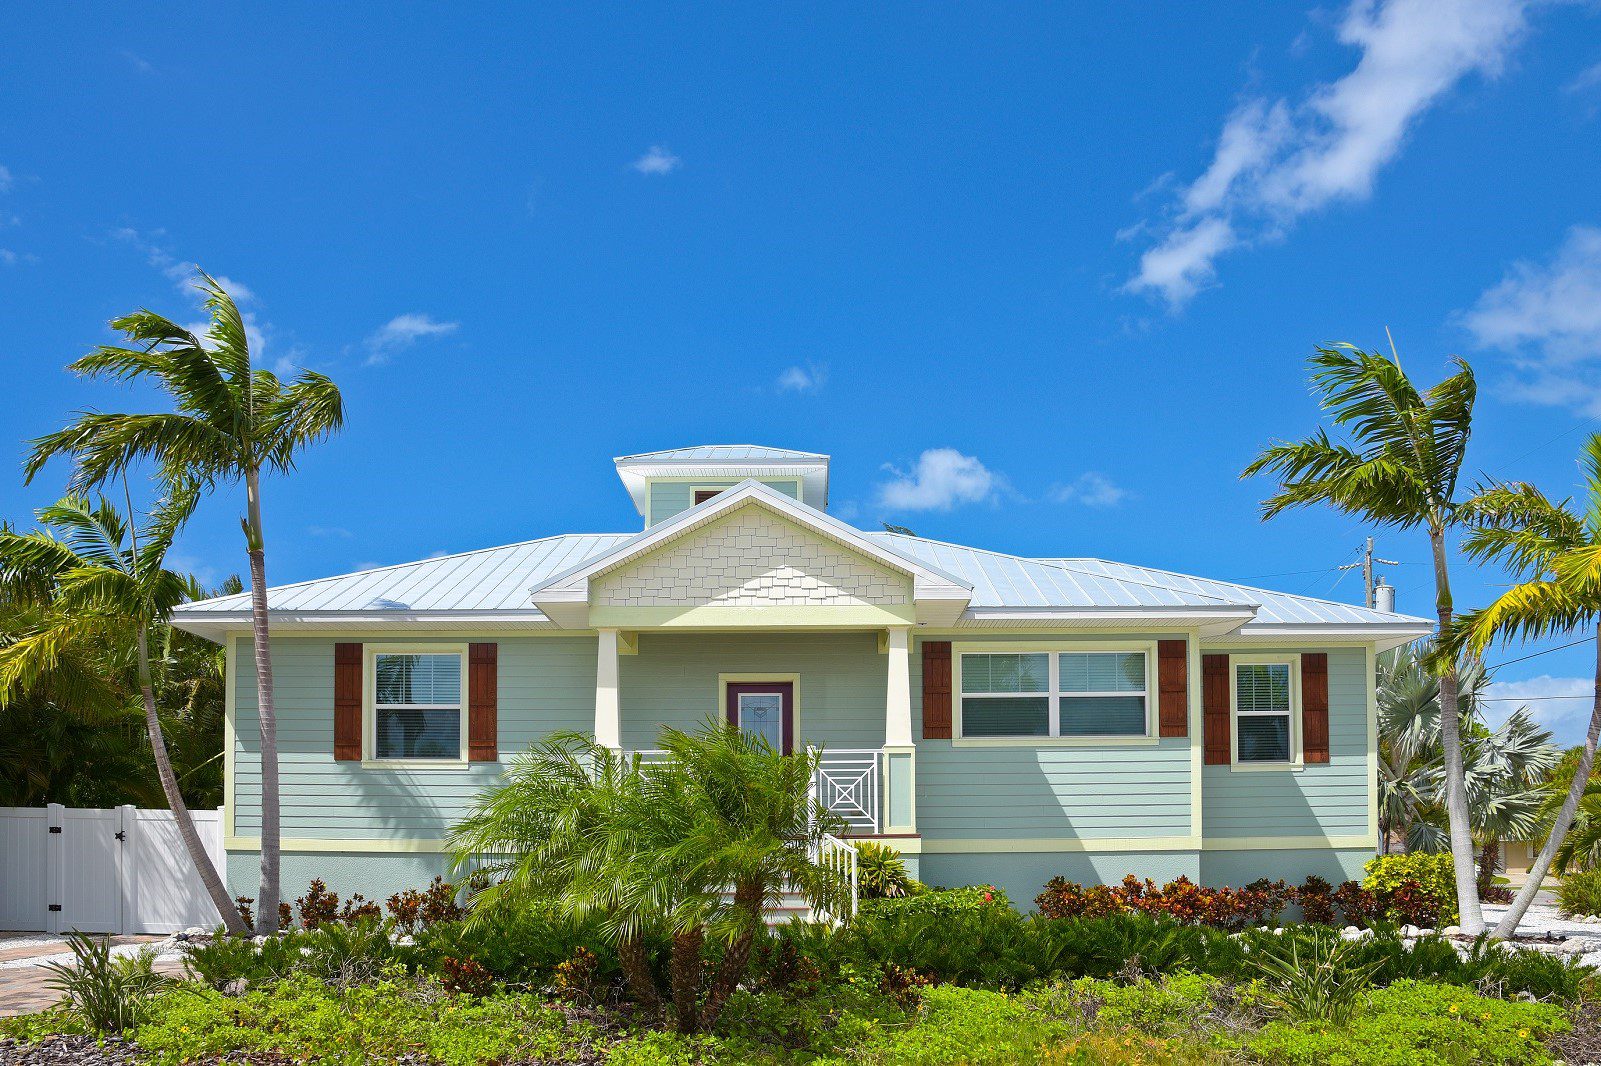 Florida Vacation Rentals for Sale: Why Invest  Mashvisor